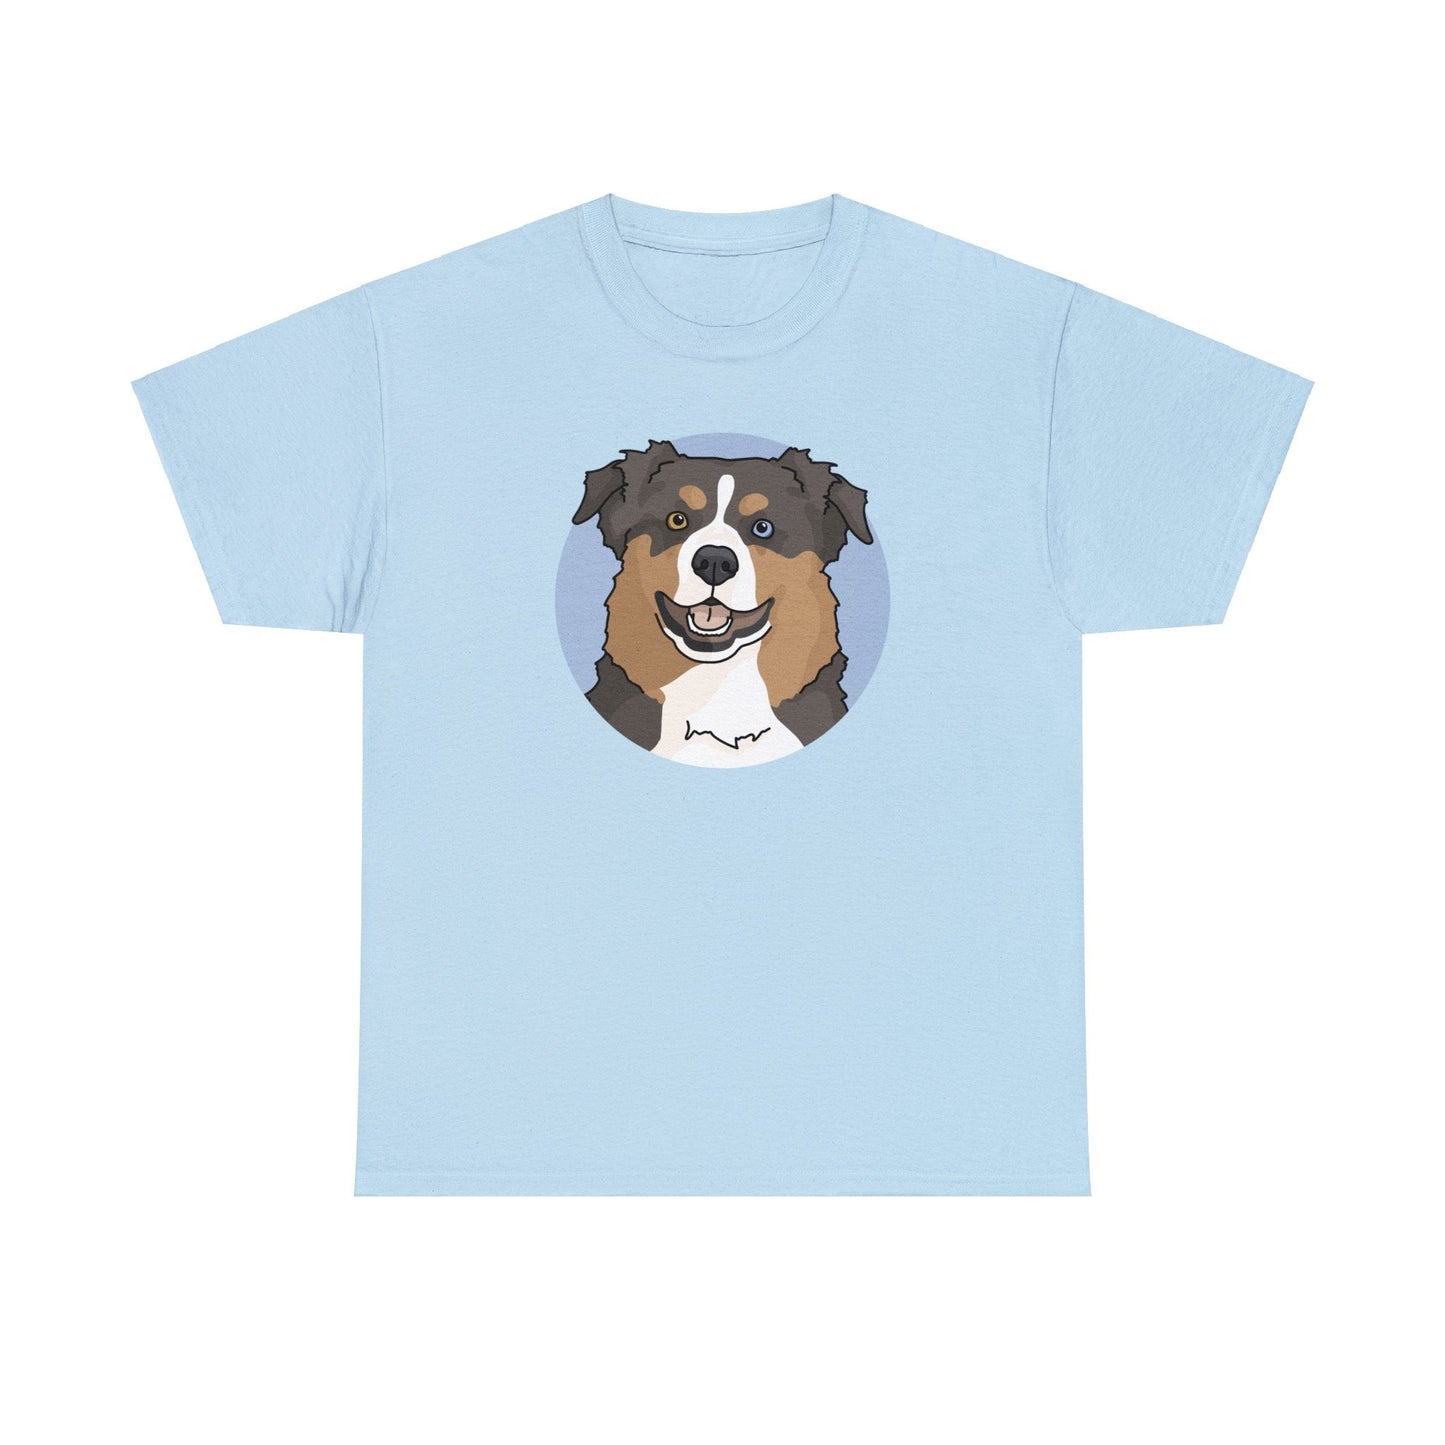 Australian Shepherd | T-shirt - Detezi Designs-32694239283499080904